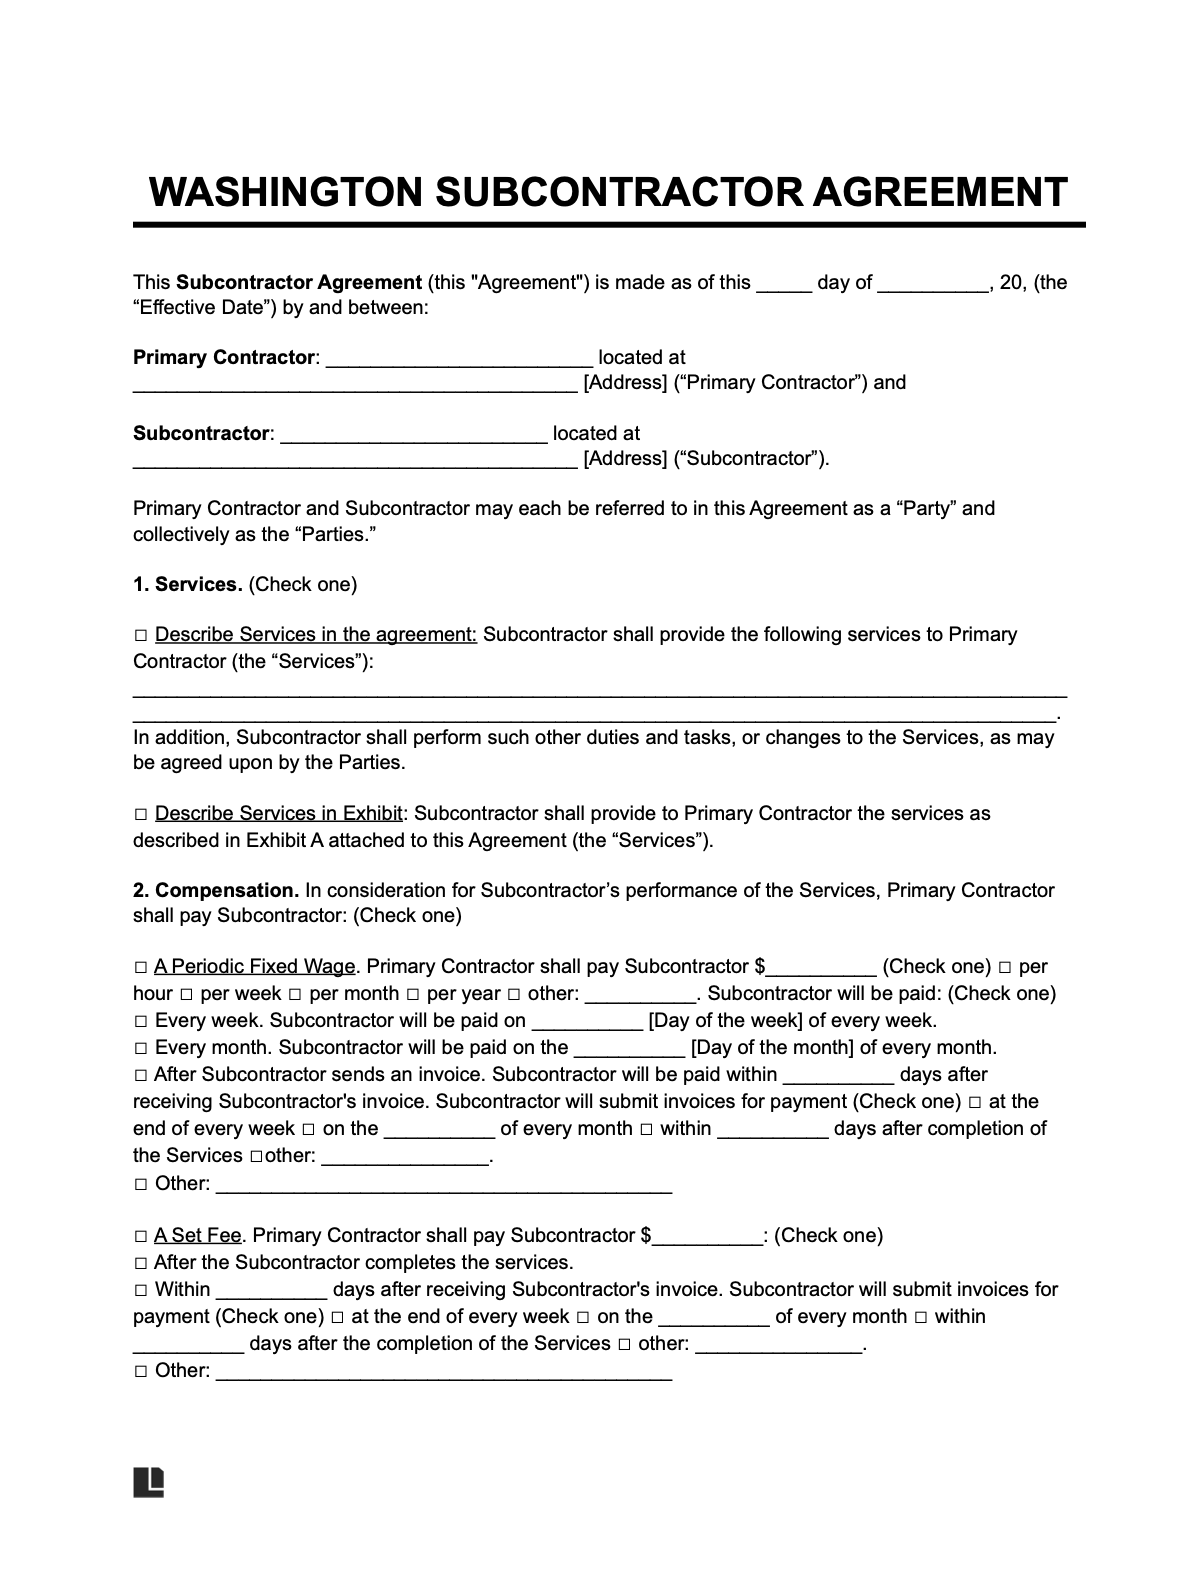 washington subcontractor agreement template